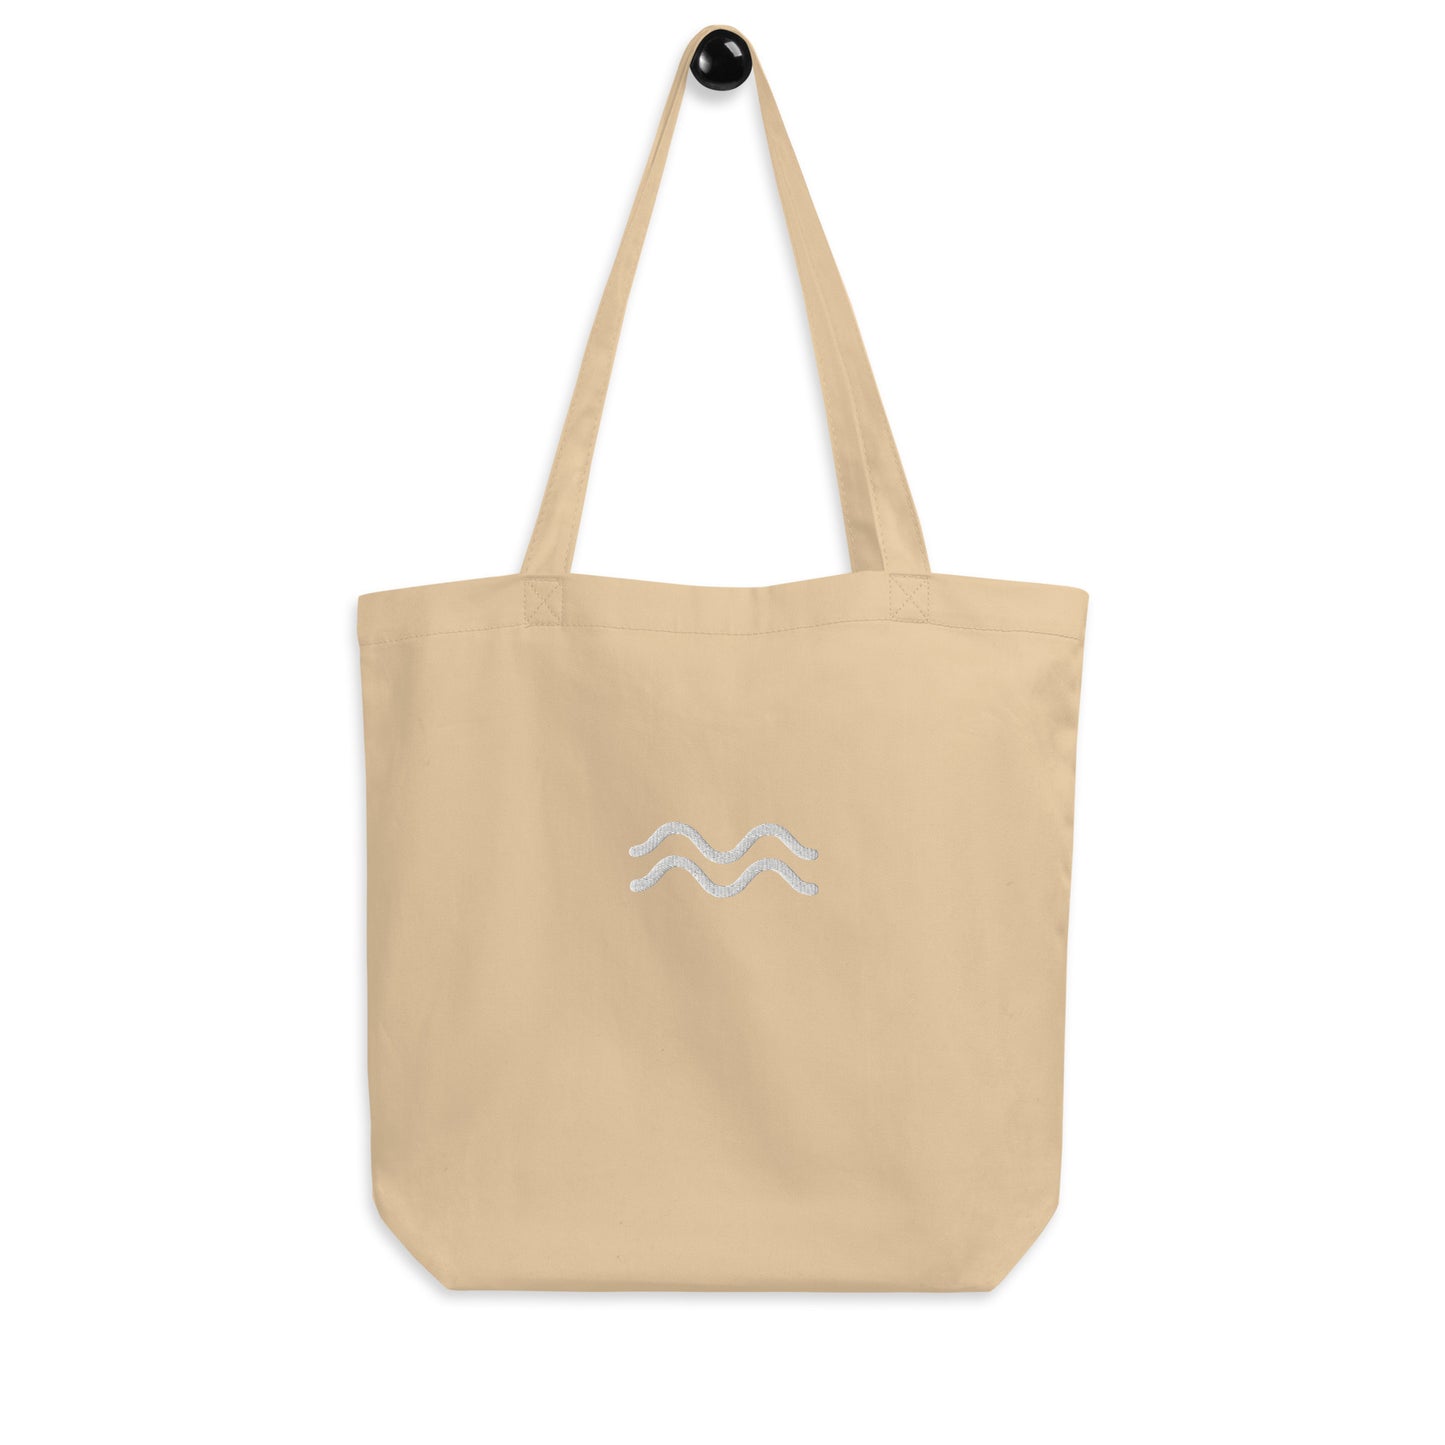 Aquarius - Small Open Tote Bag - White Thread